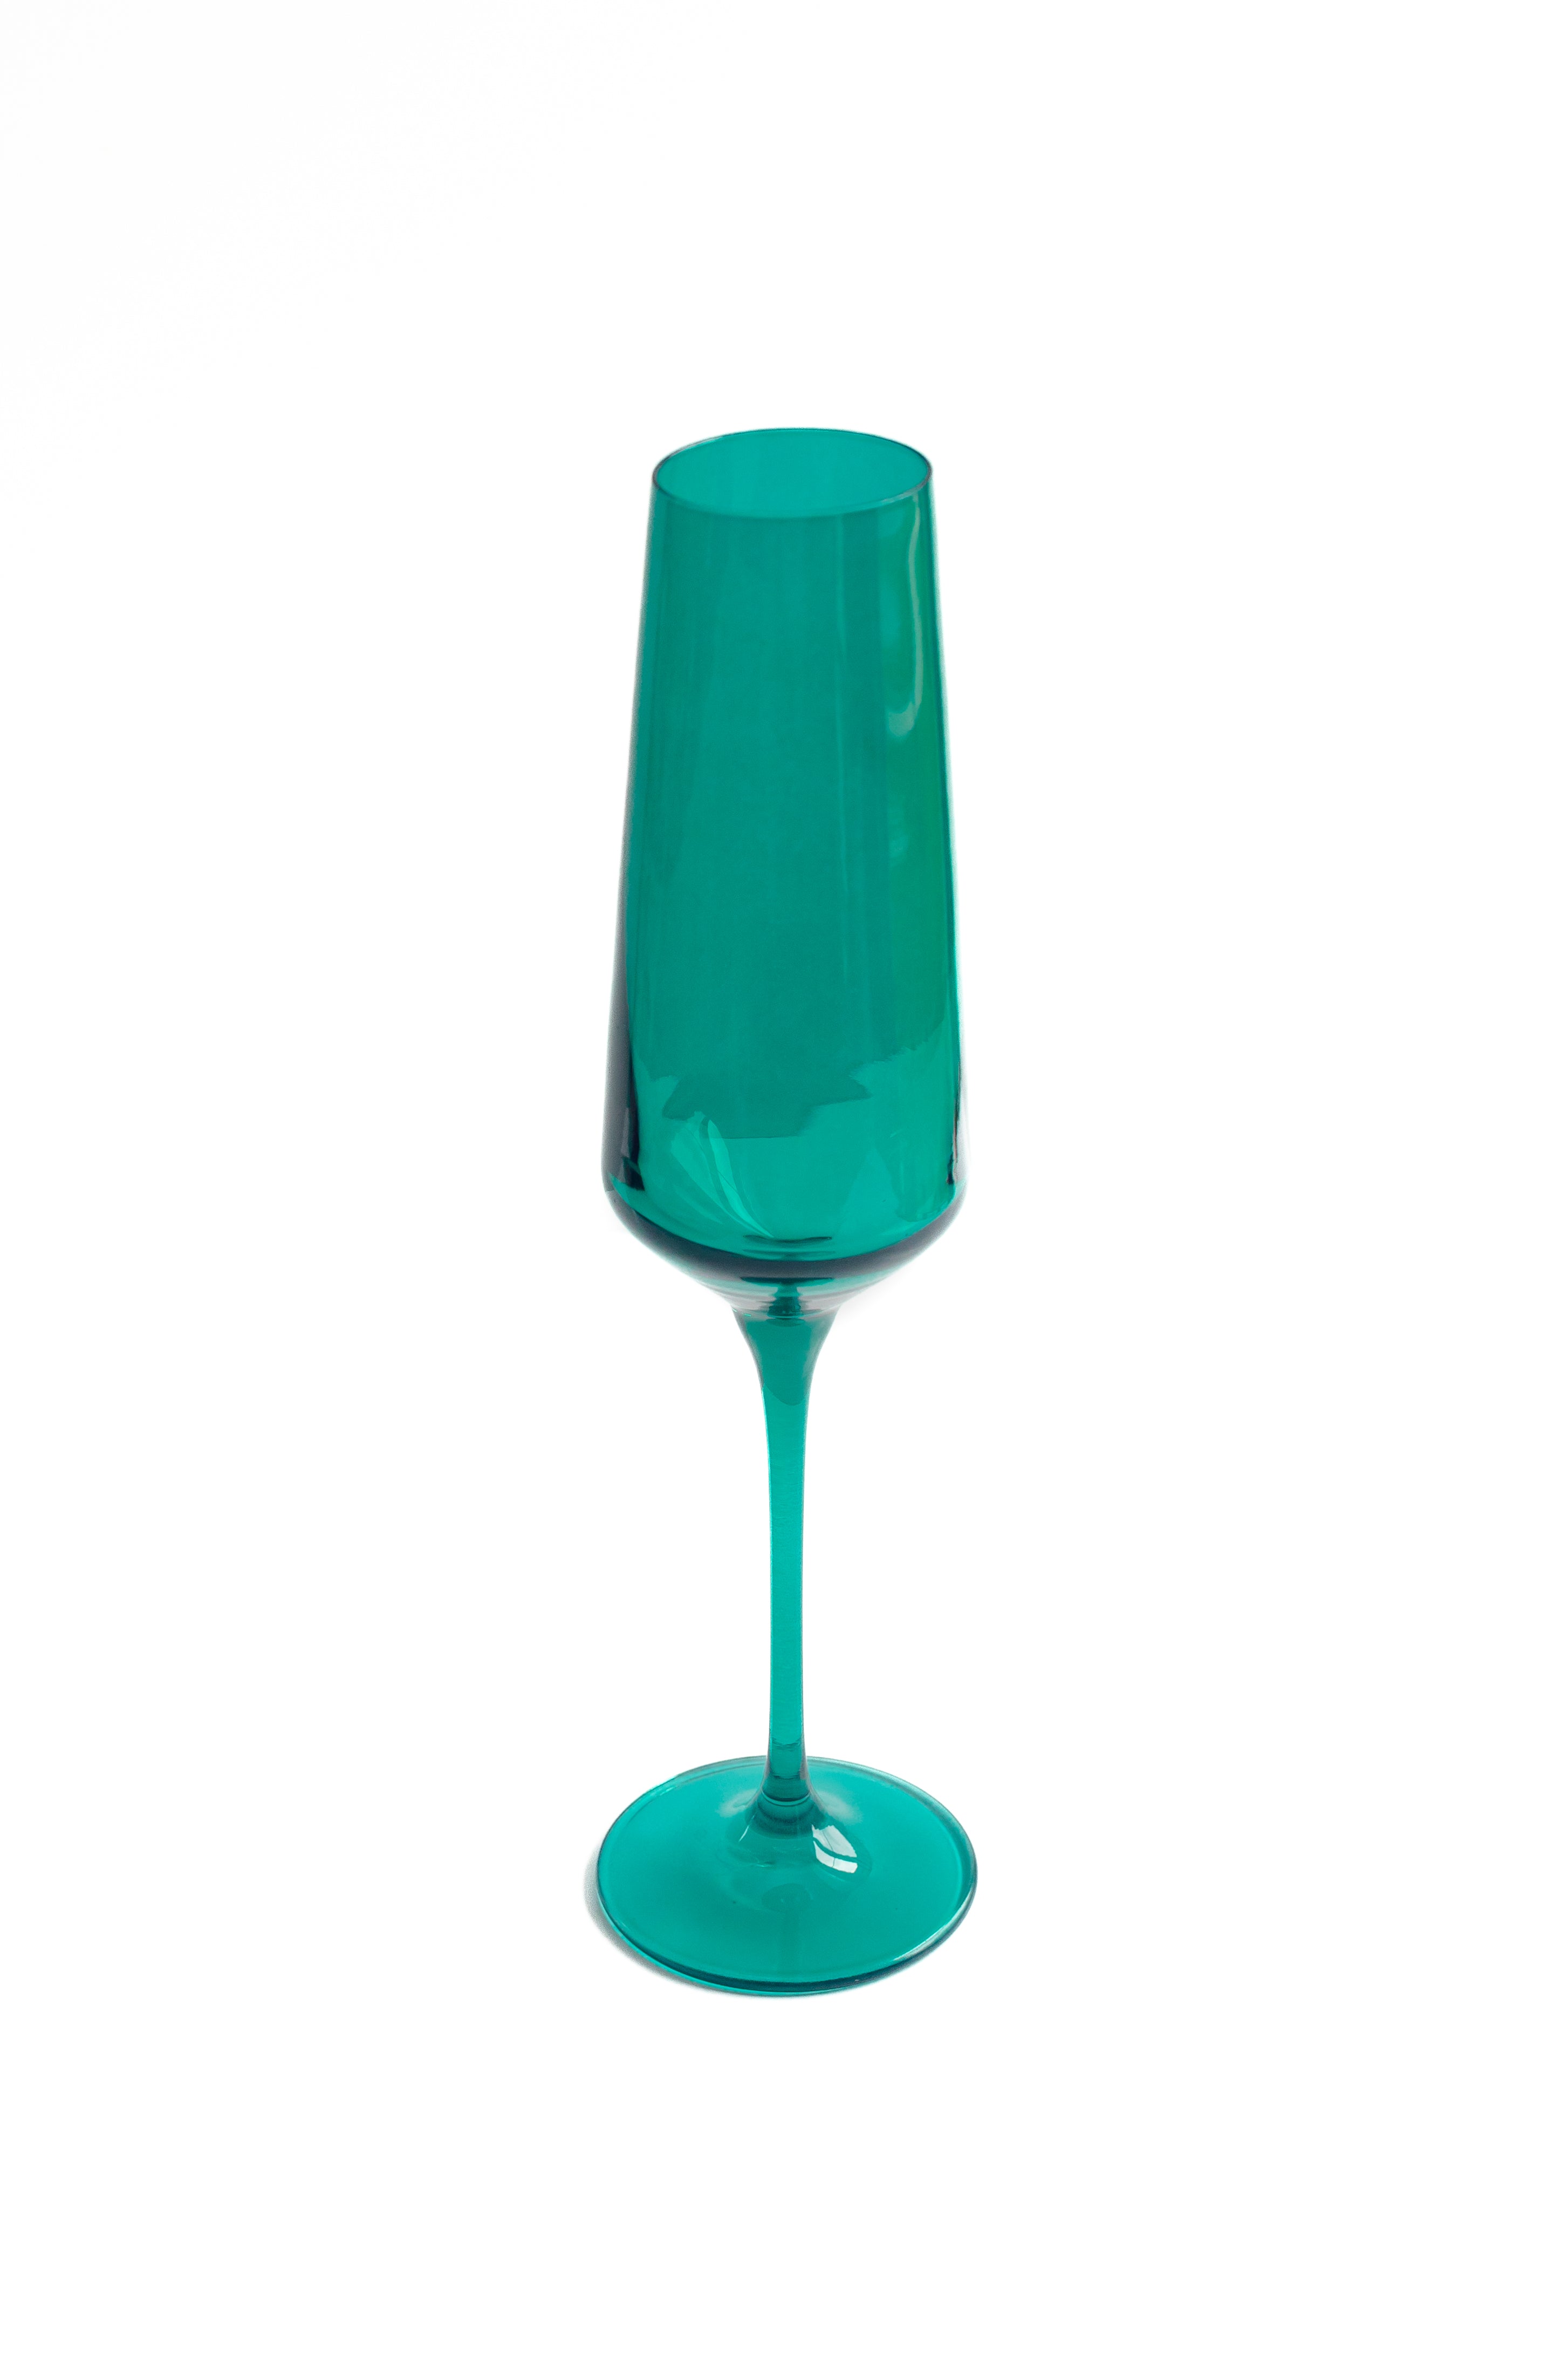 Estelle Colored Champagne Flute - Set of 2 {Emerald Green}